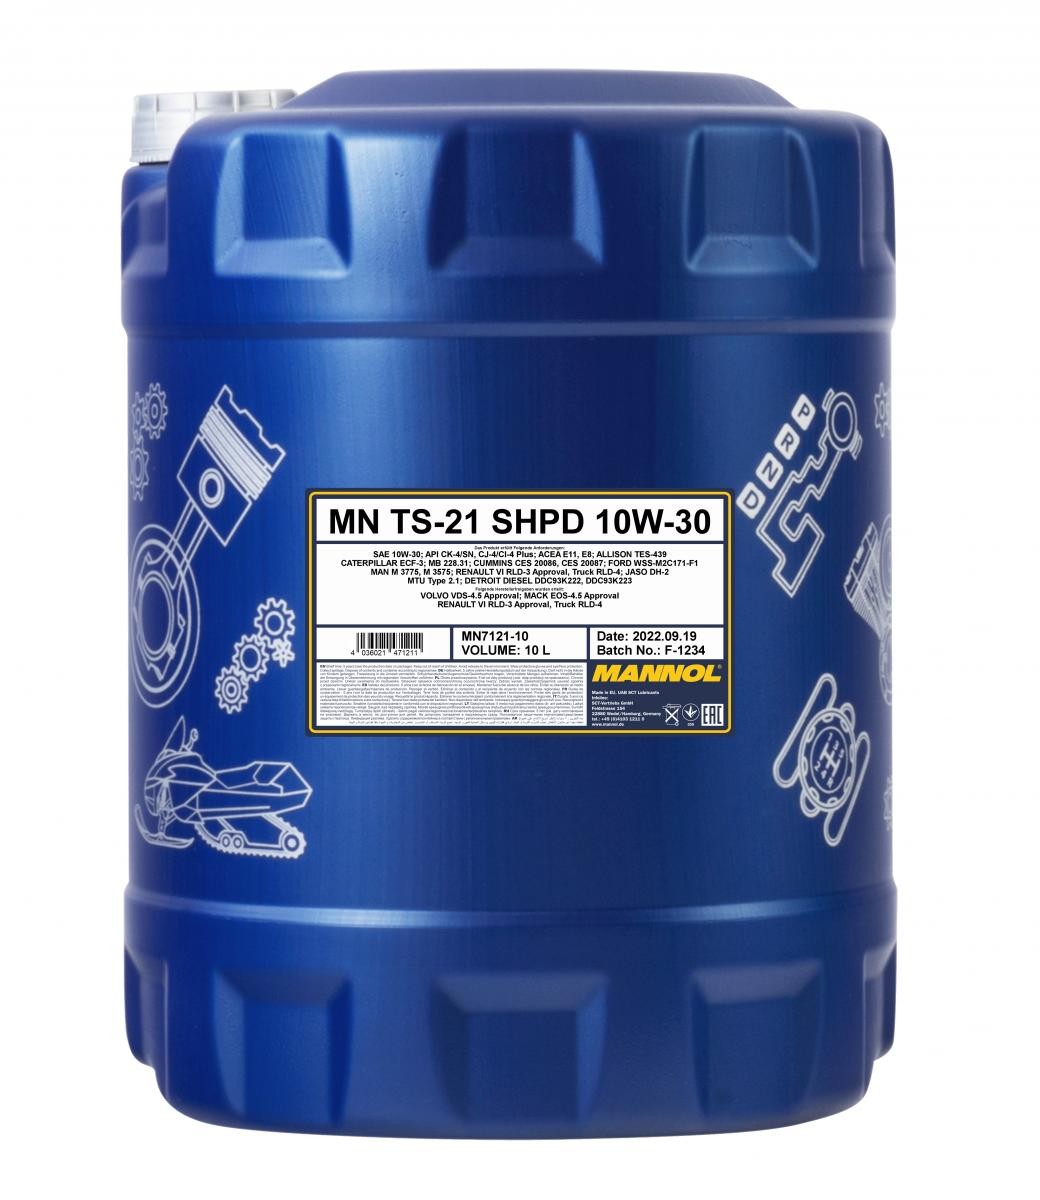 Aceite para motor 10W 30 longlife gasolina - MN7121-10 MANNOL TS-21, SHPD